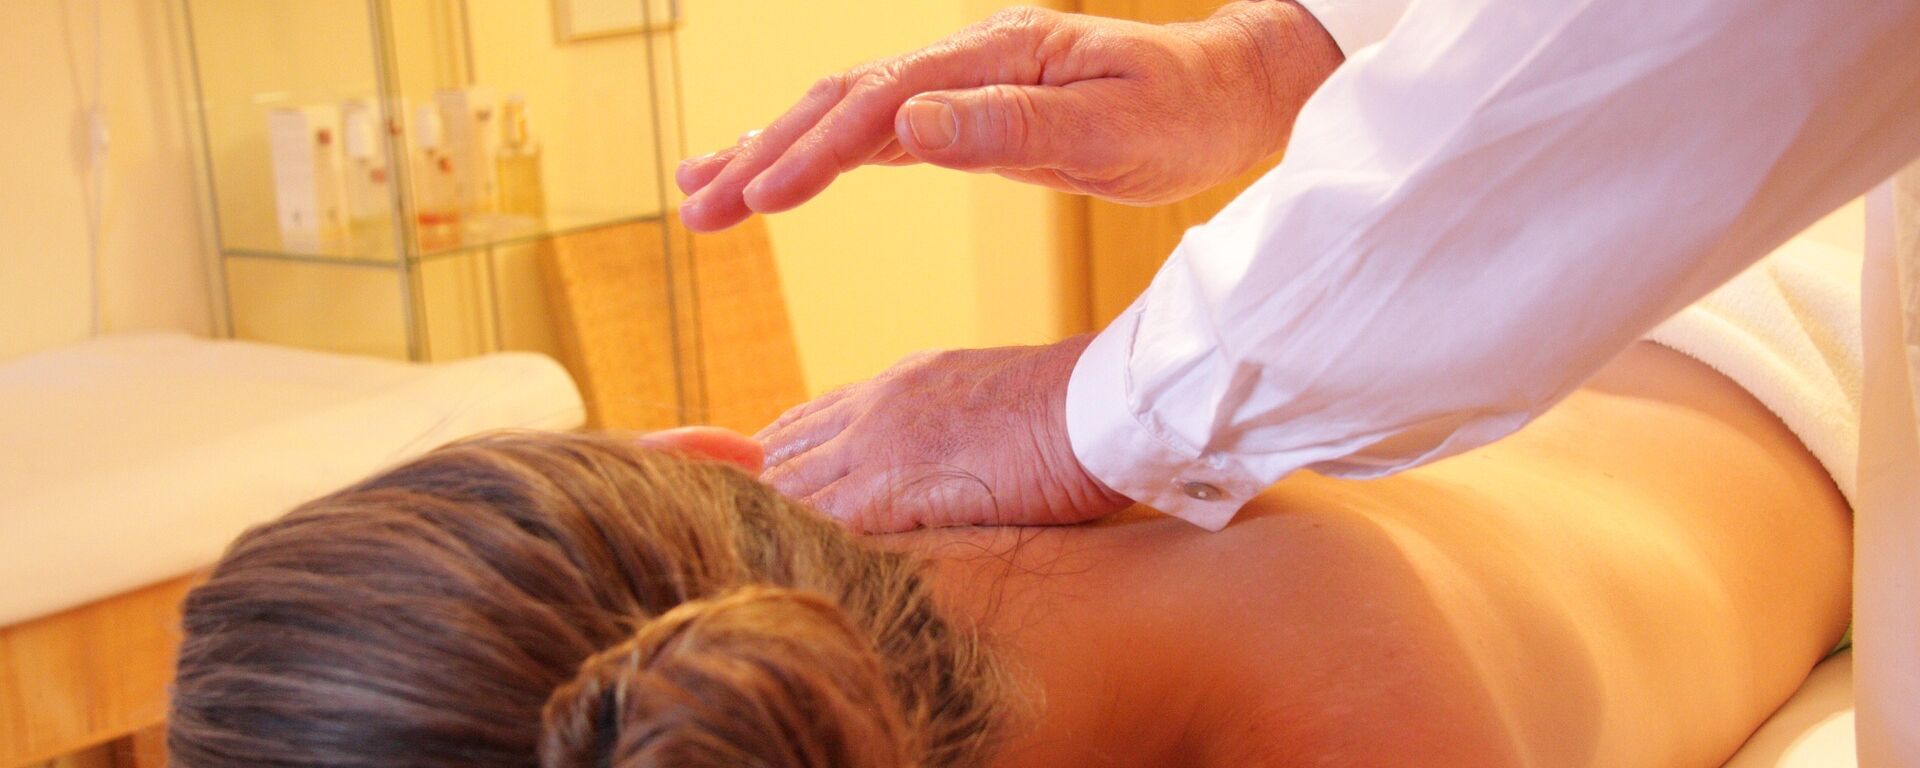 Physiotherapie Massage…